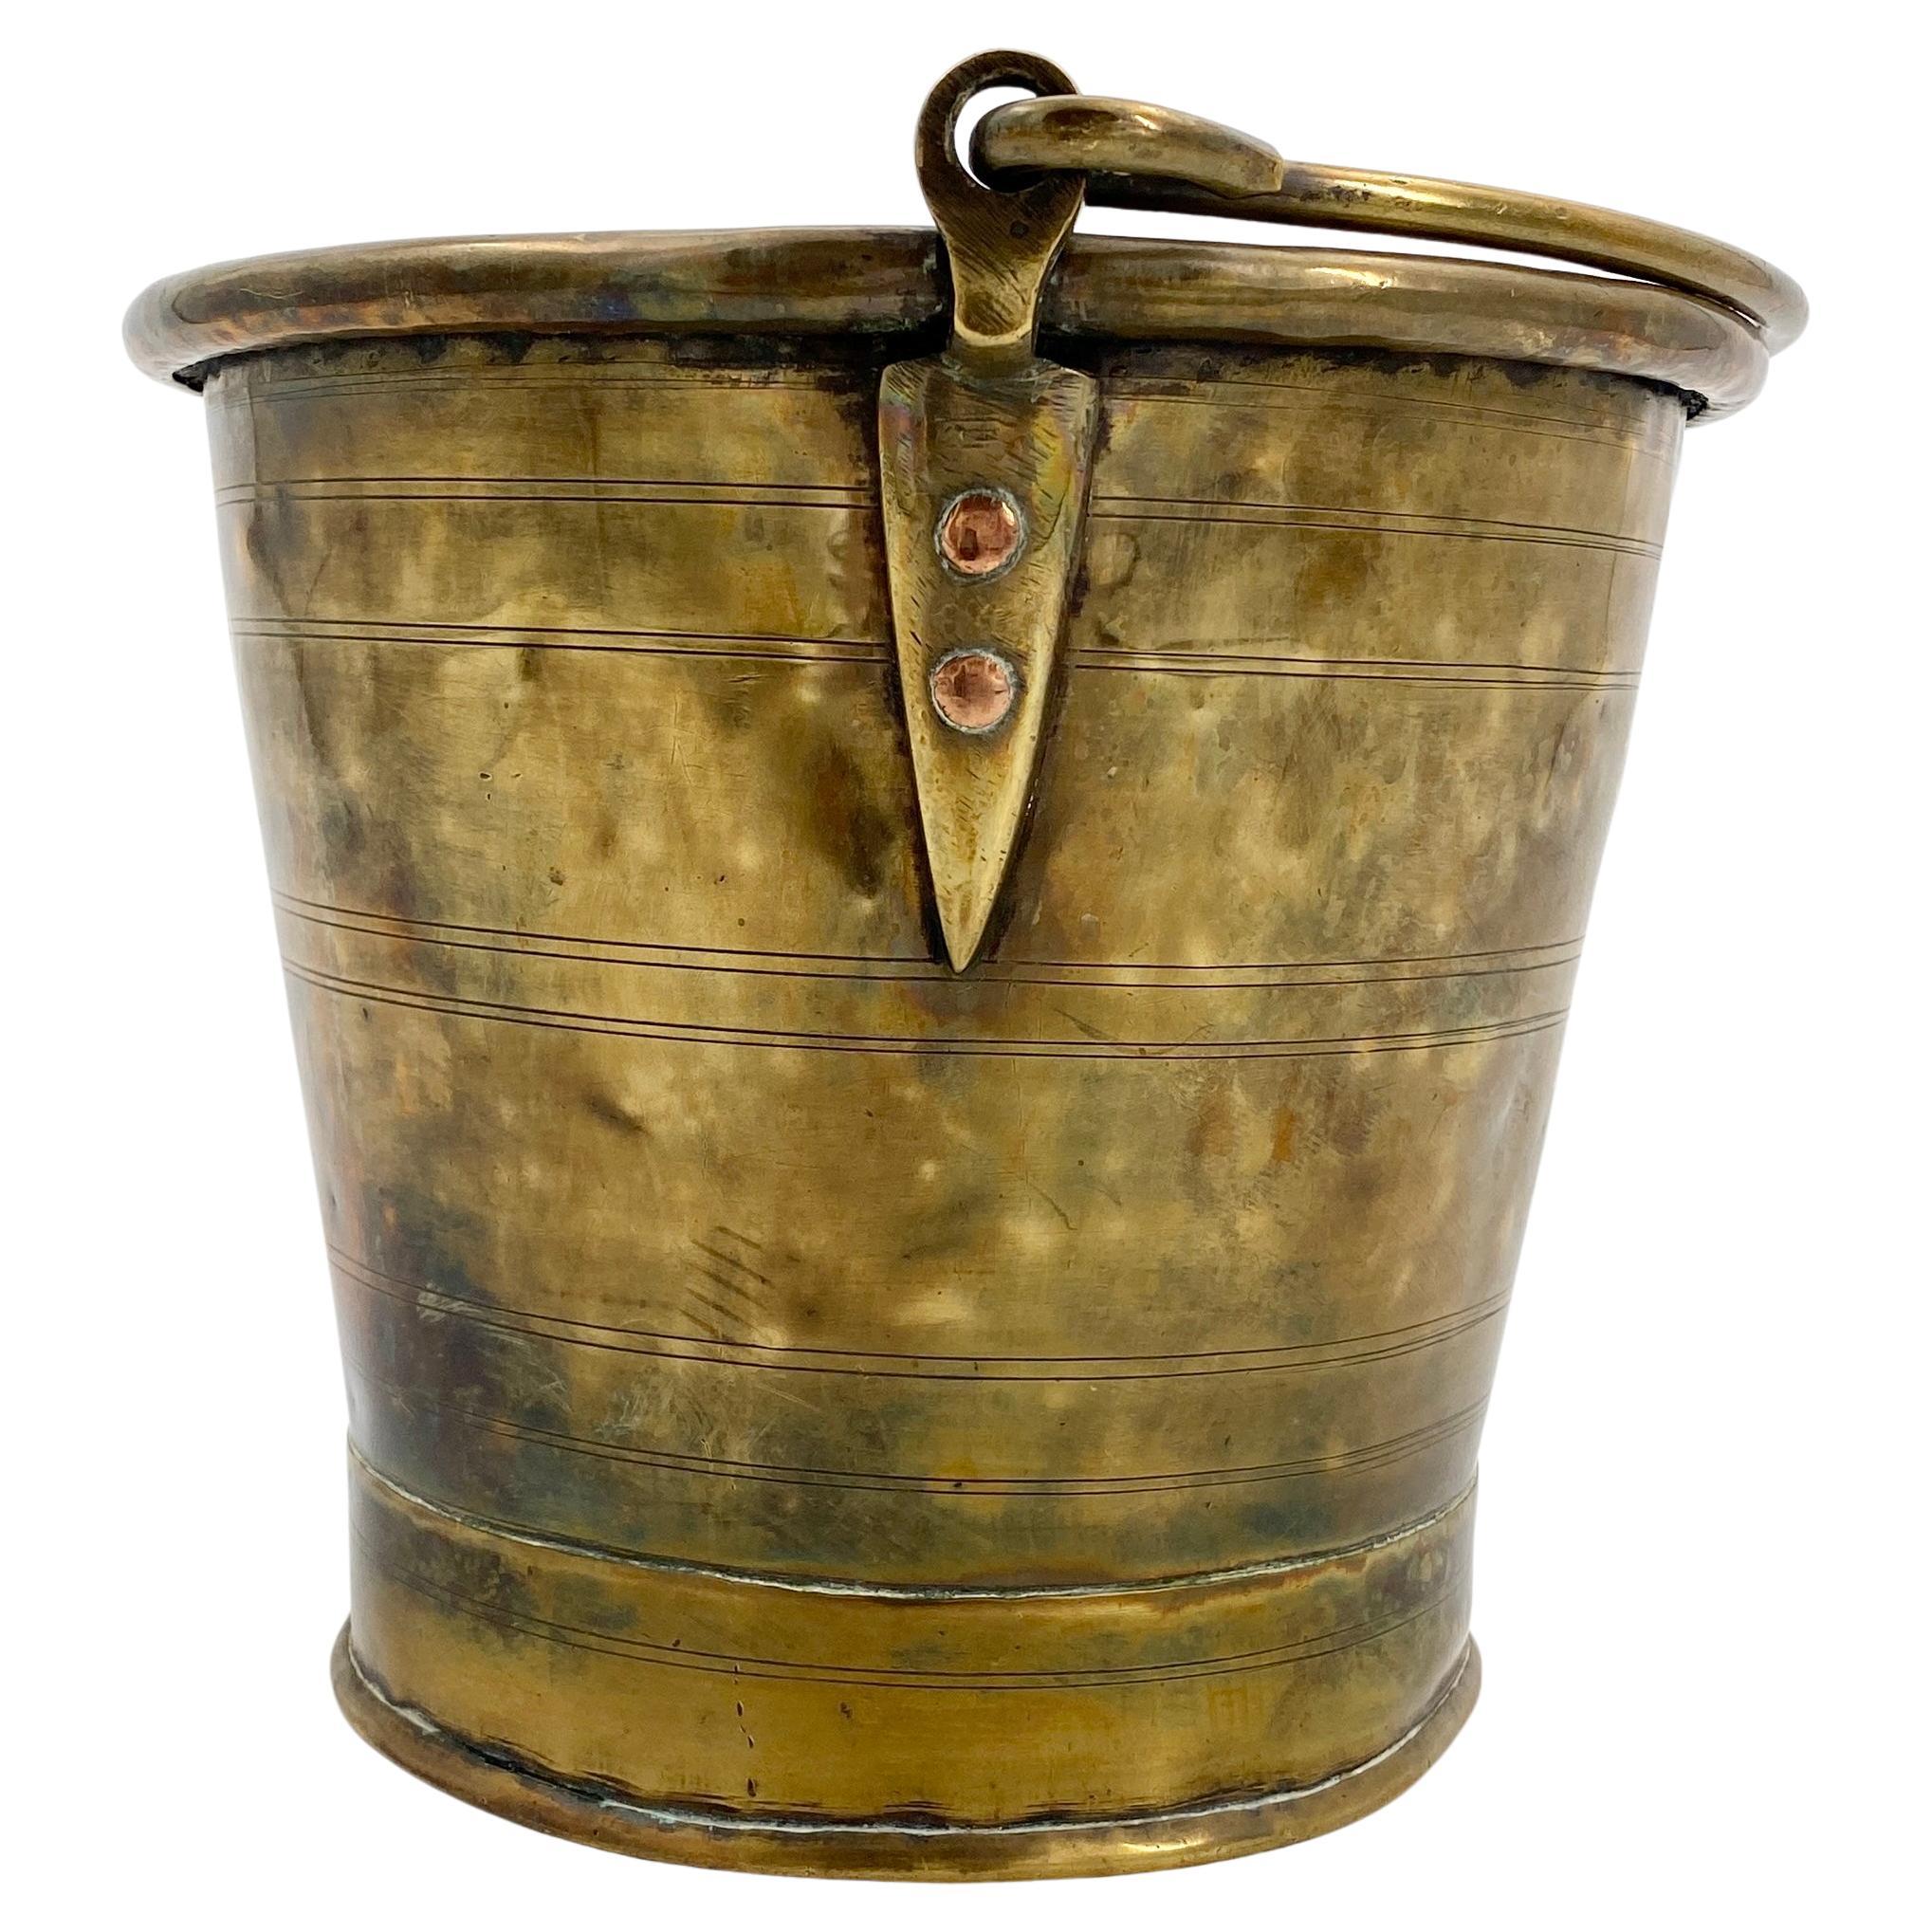 Antique Scandinavian Coal or Fireplace Bucket in Brass, Circa 1810